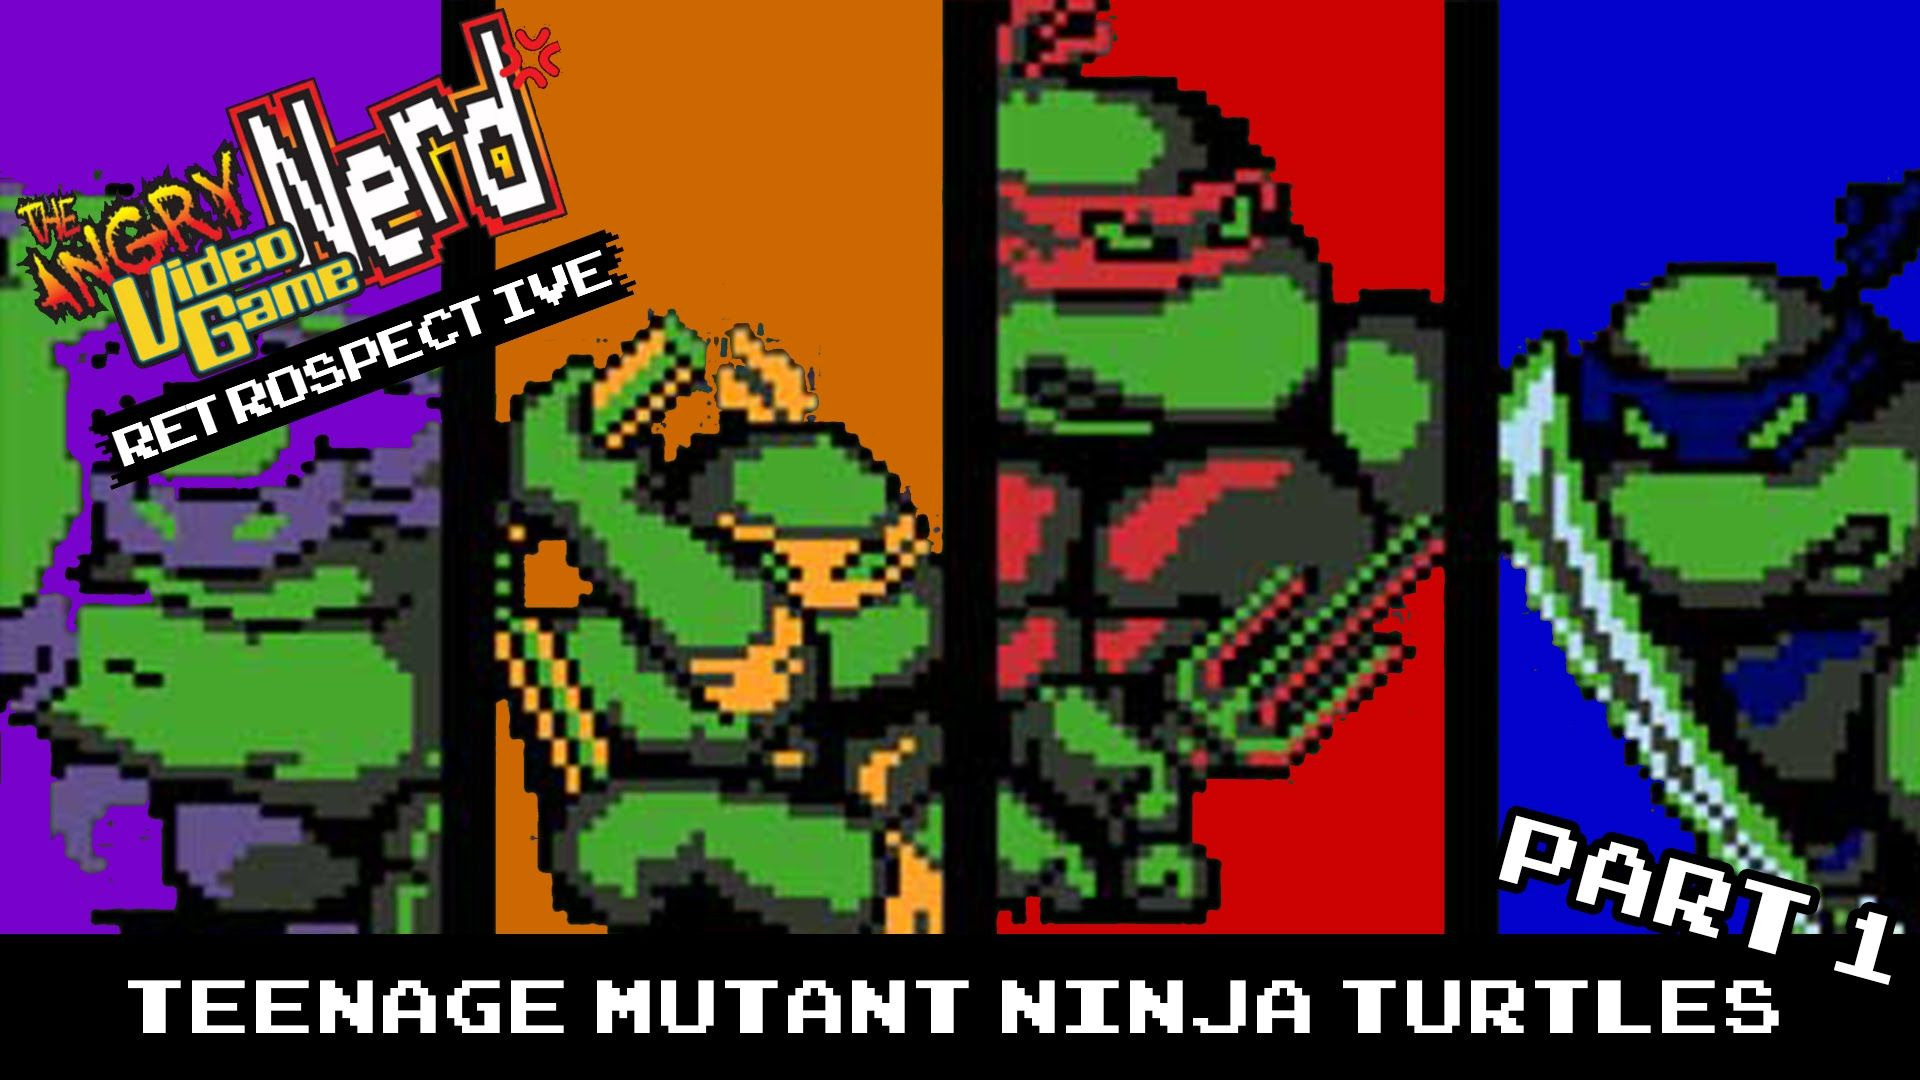 Злостный видеоигровой задрот — s02e01 — Teenage Mutant Ninja Turtles 3 Movie Review (Part 1)